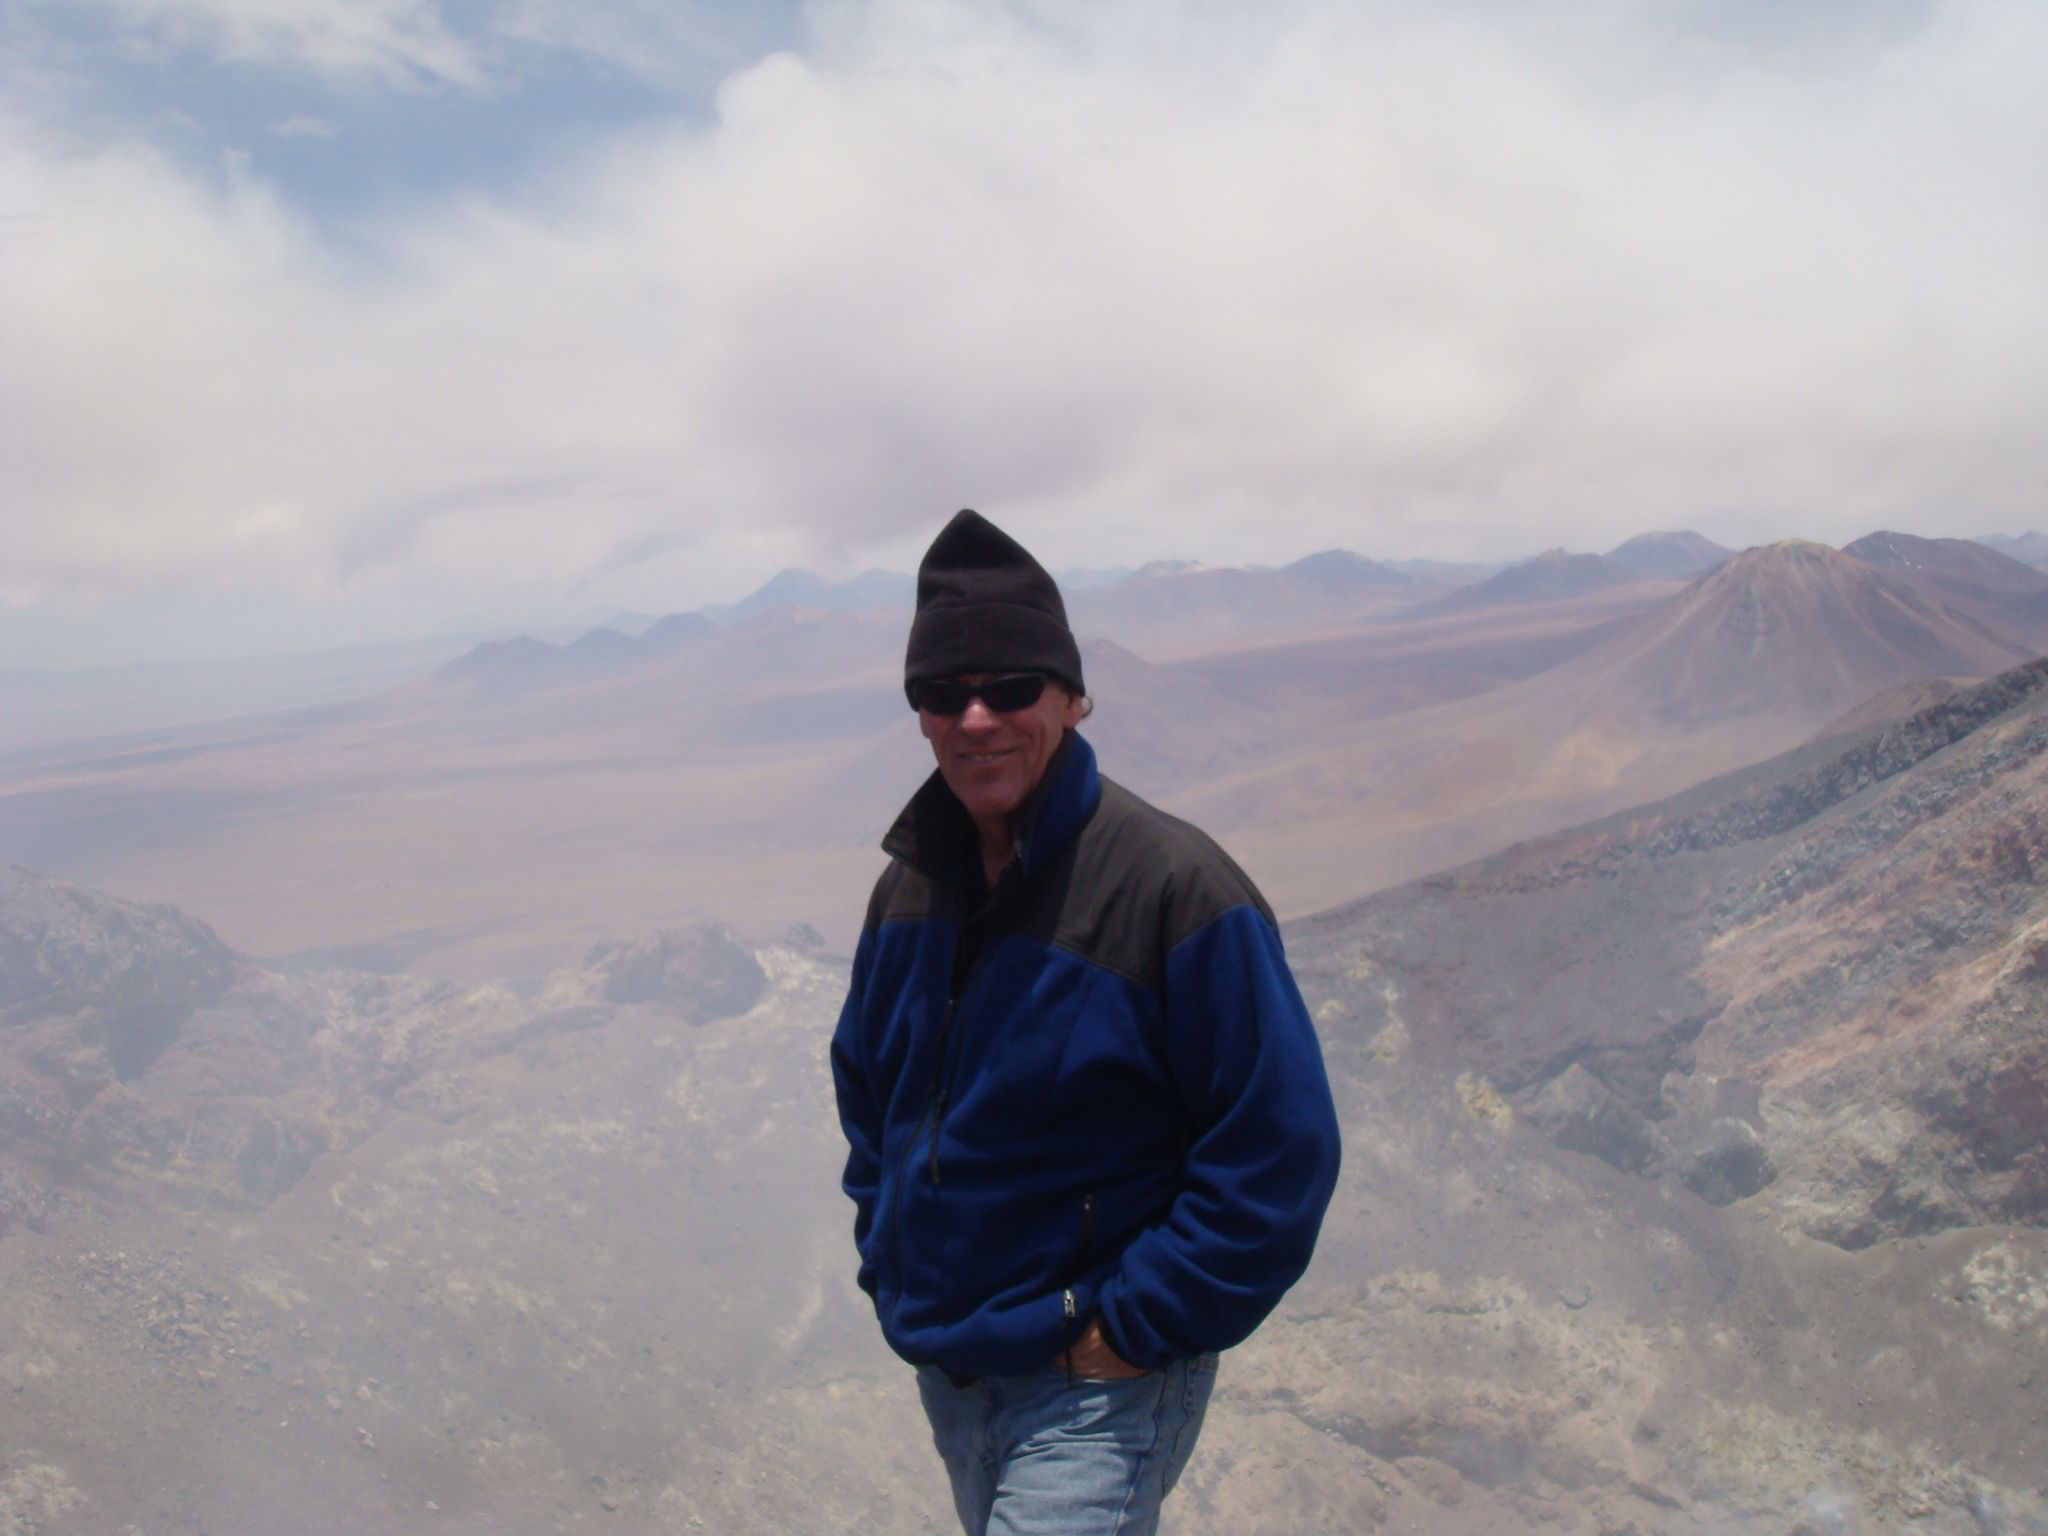 Randall atop a volcano peak in the Atacama Desert,Chile.